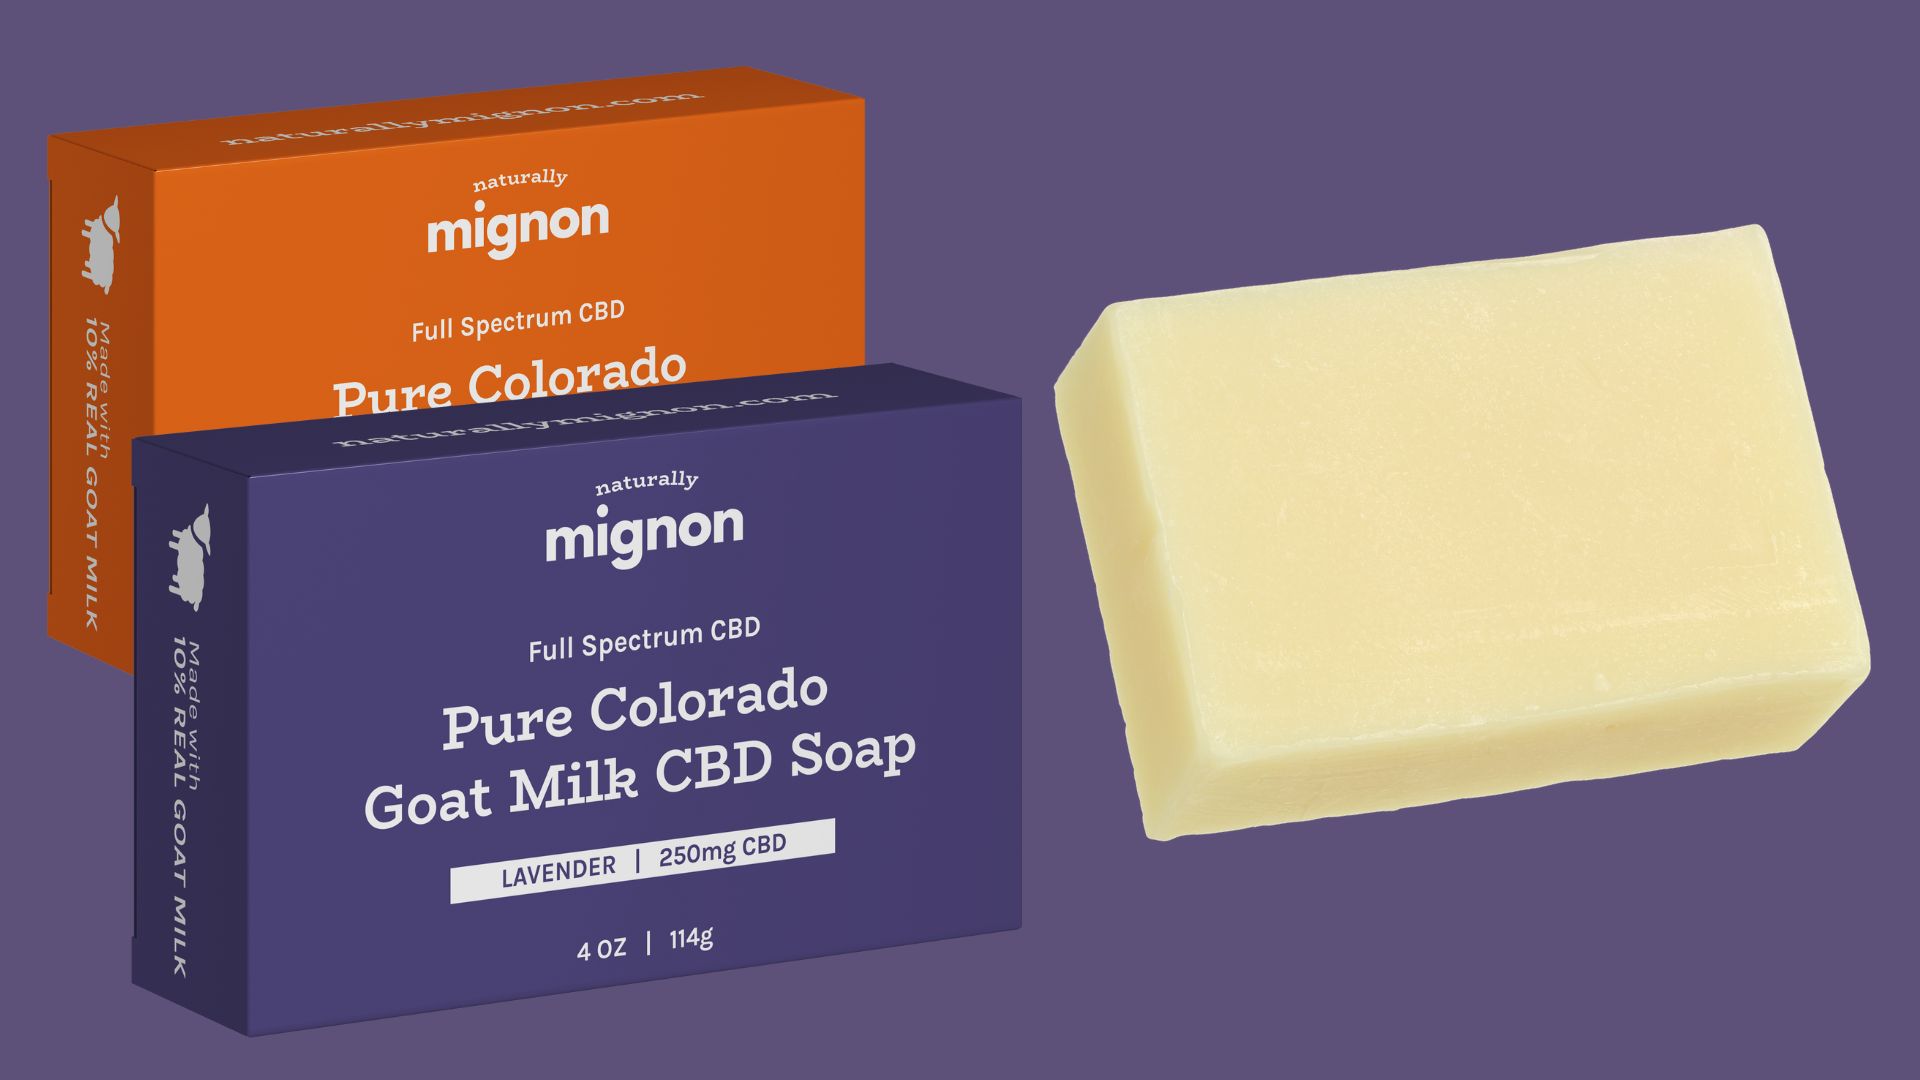 CBD Soap - Naturally Mignon CBD